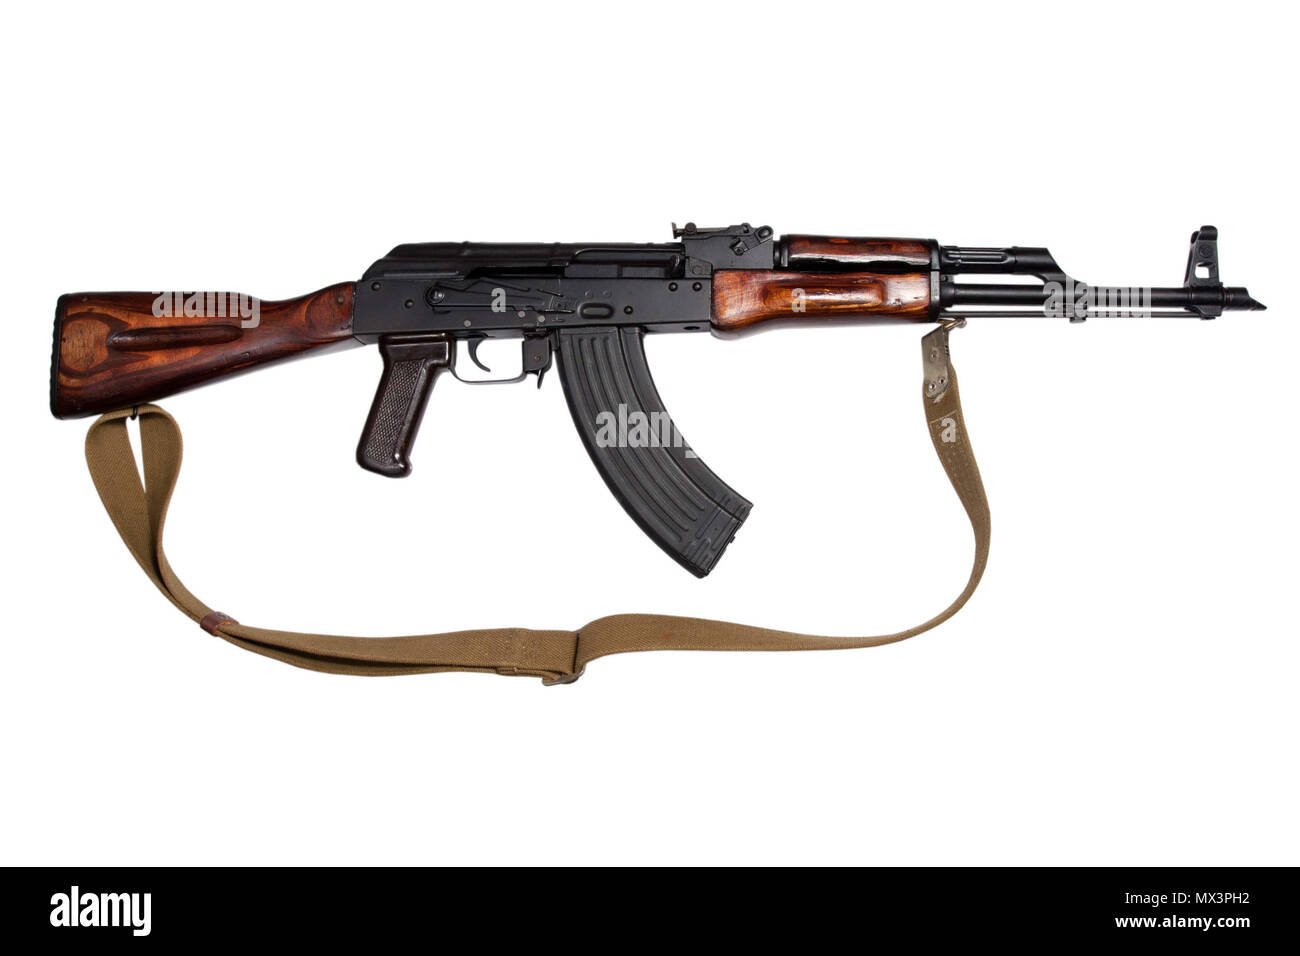 AKM (Avtomat Kalashnikova) Kalashnikov assault rifle on white Stock Photo